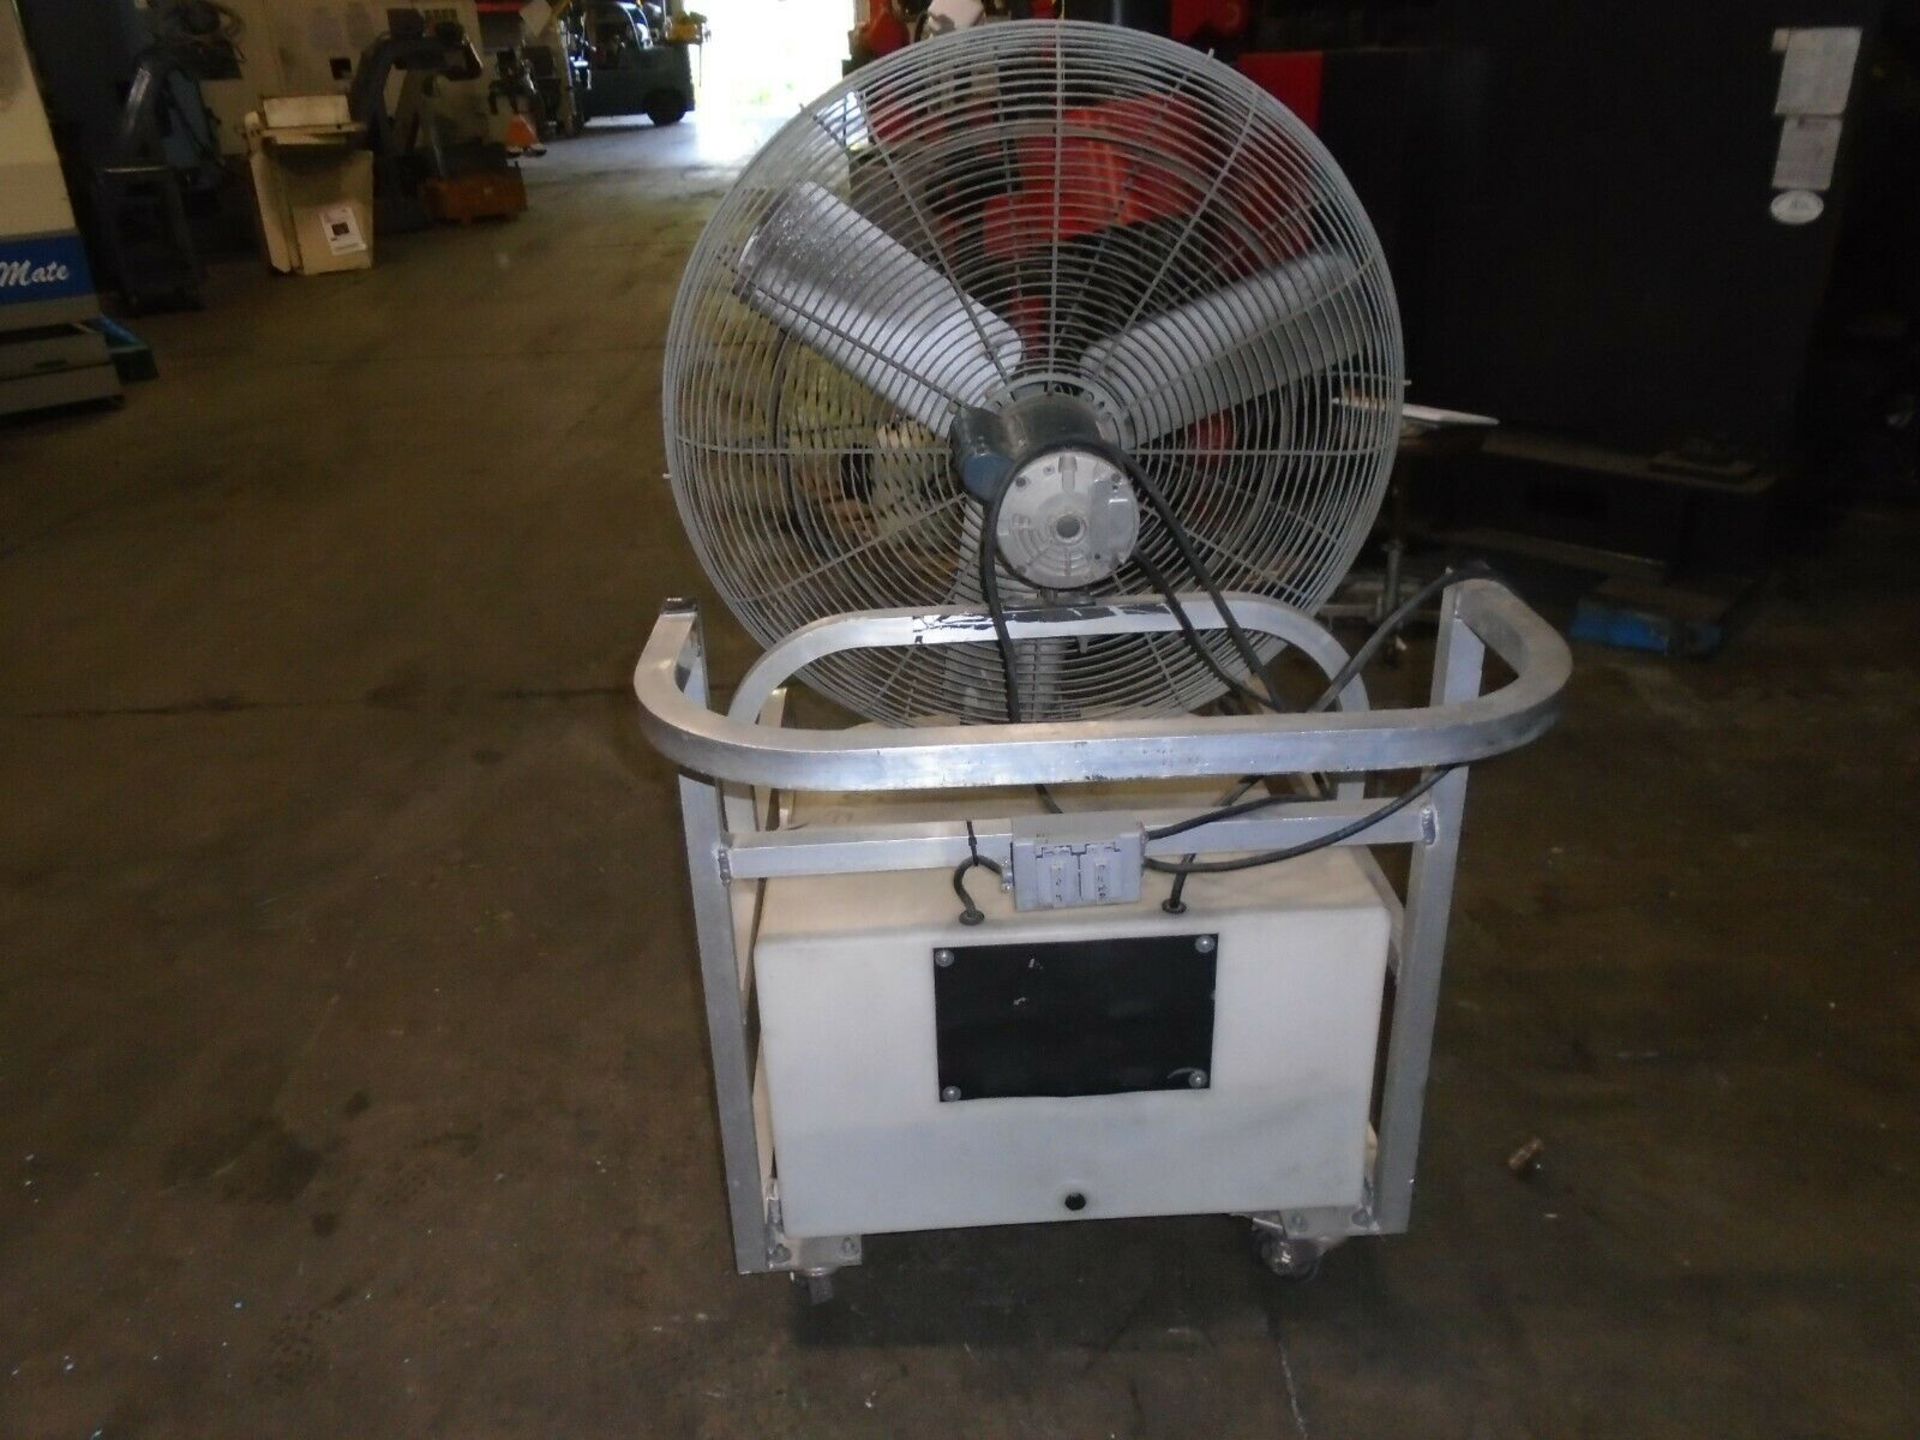 Air Chiller CU-24” Industrial Misting Fan Evaporative Cooler - Image 4 of 8